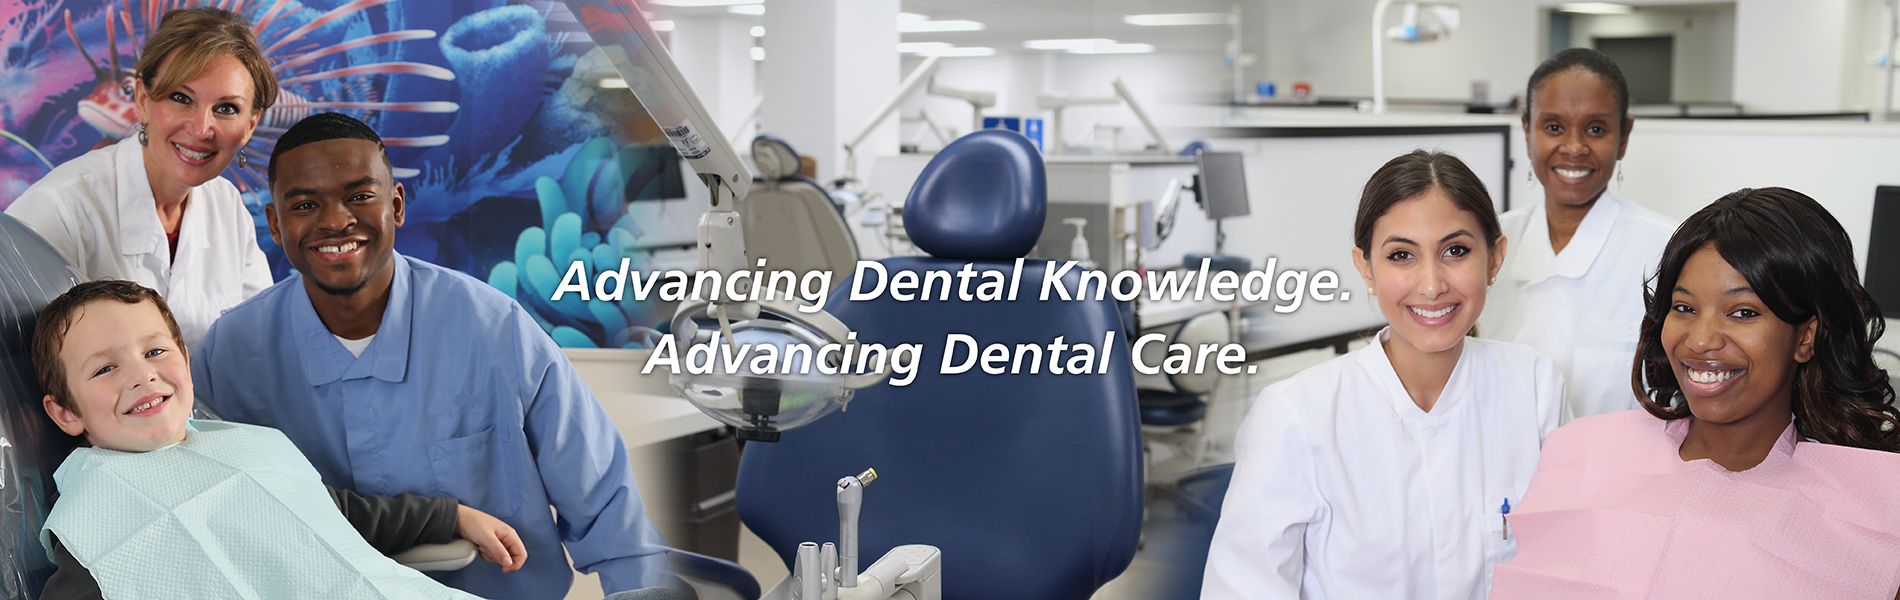 Advancing Dental Knowledge Advancing Dental Care